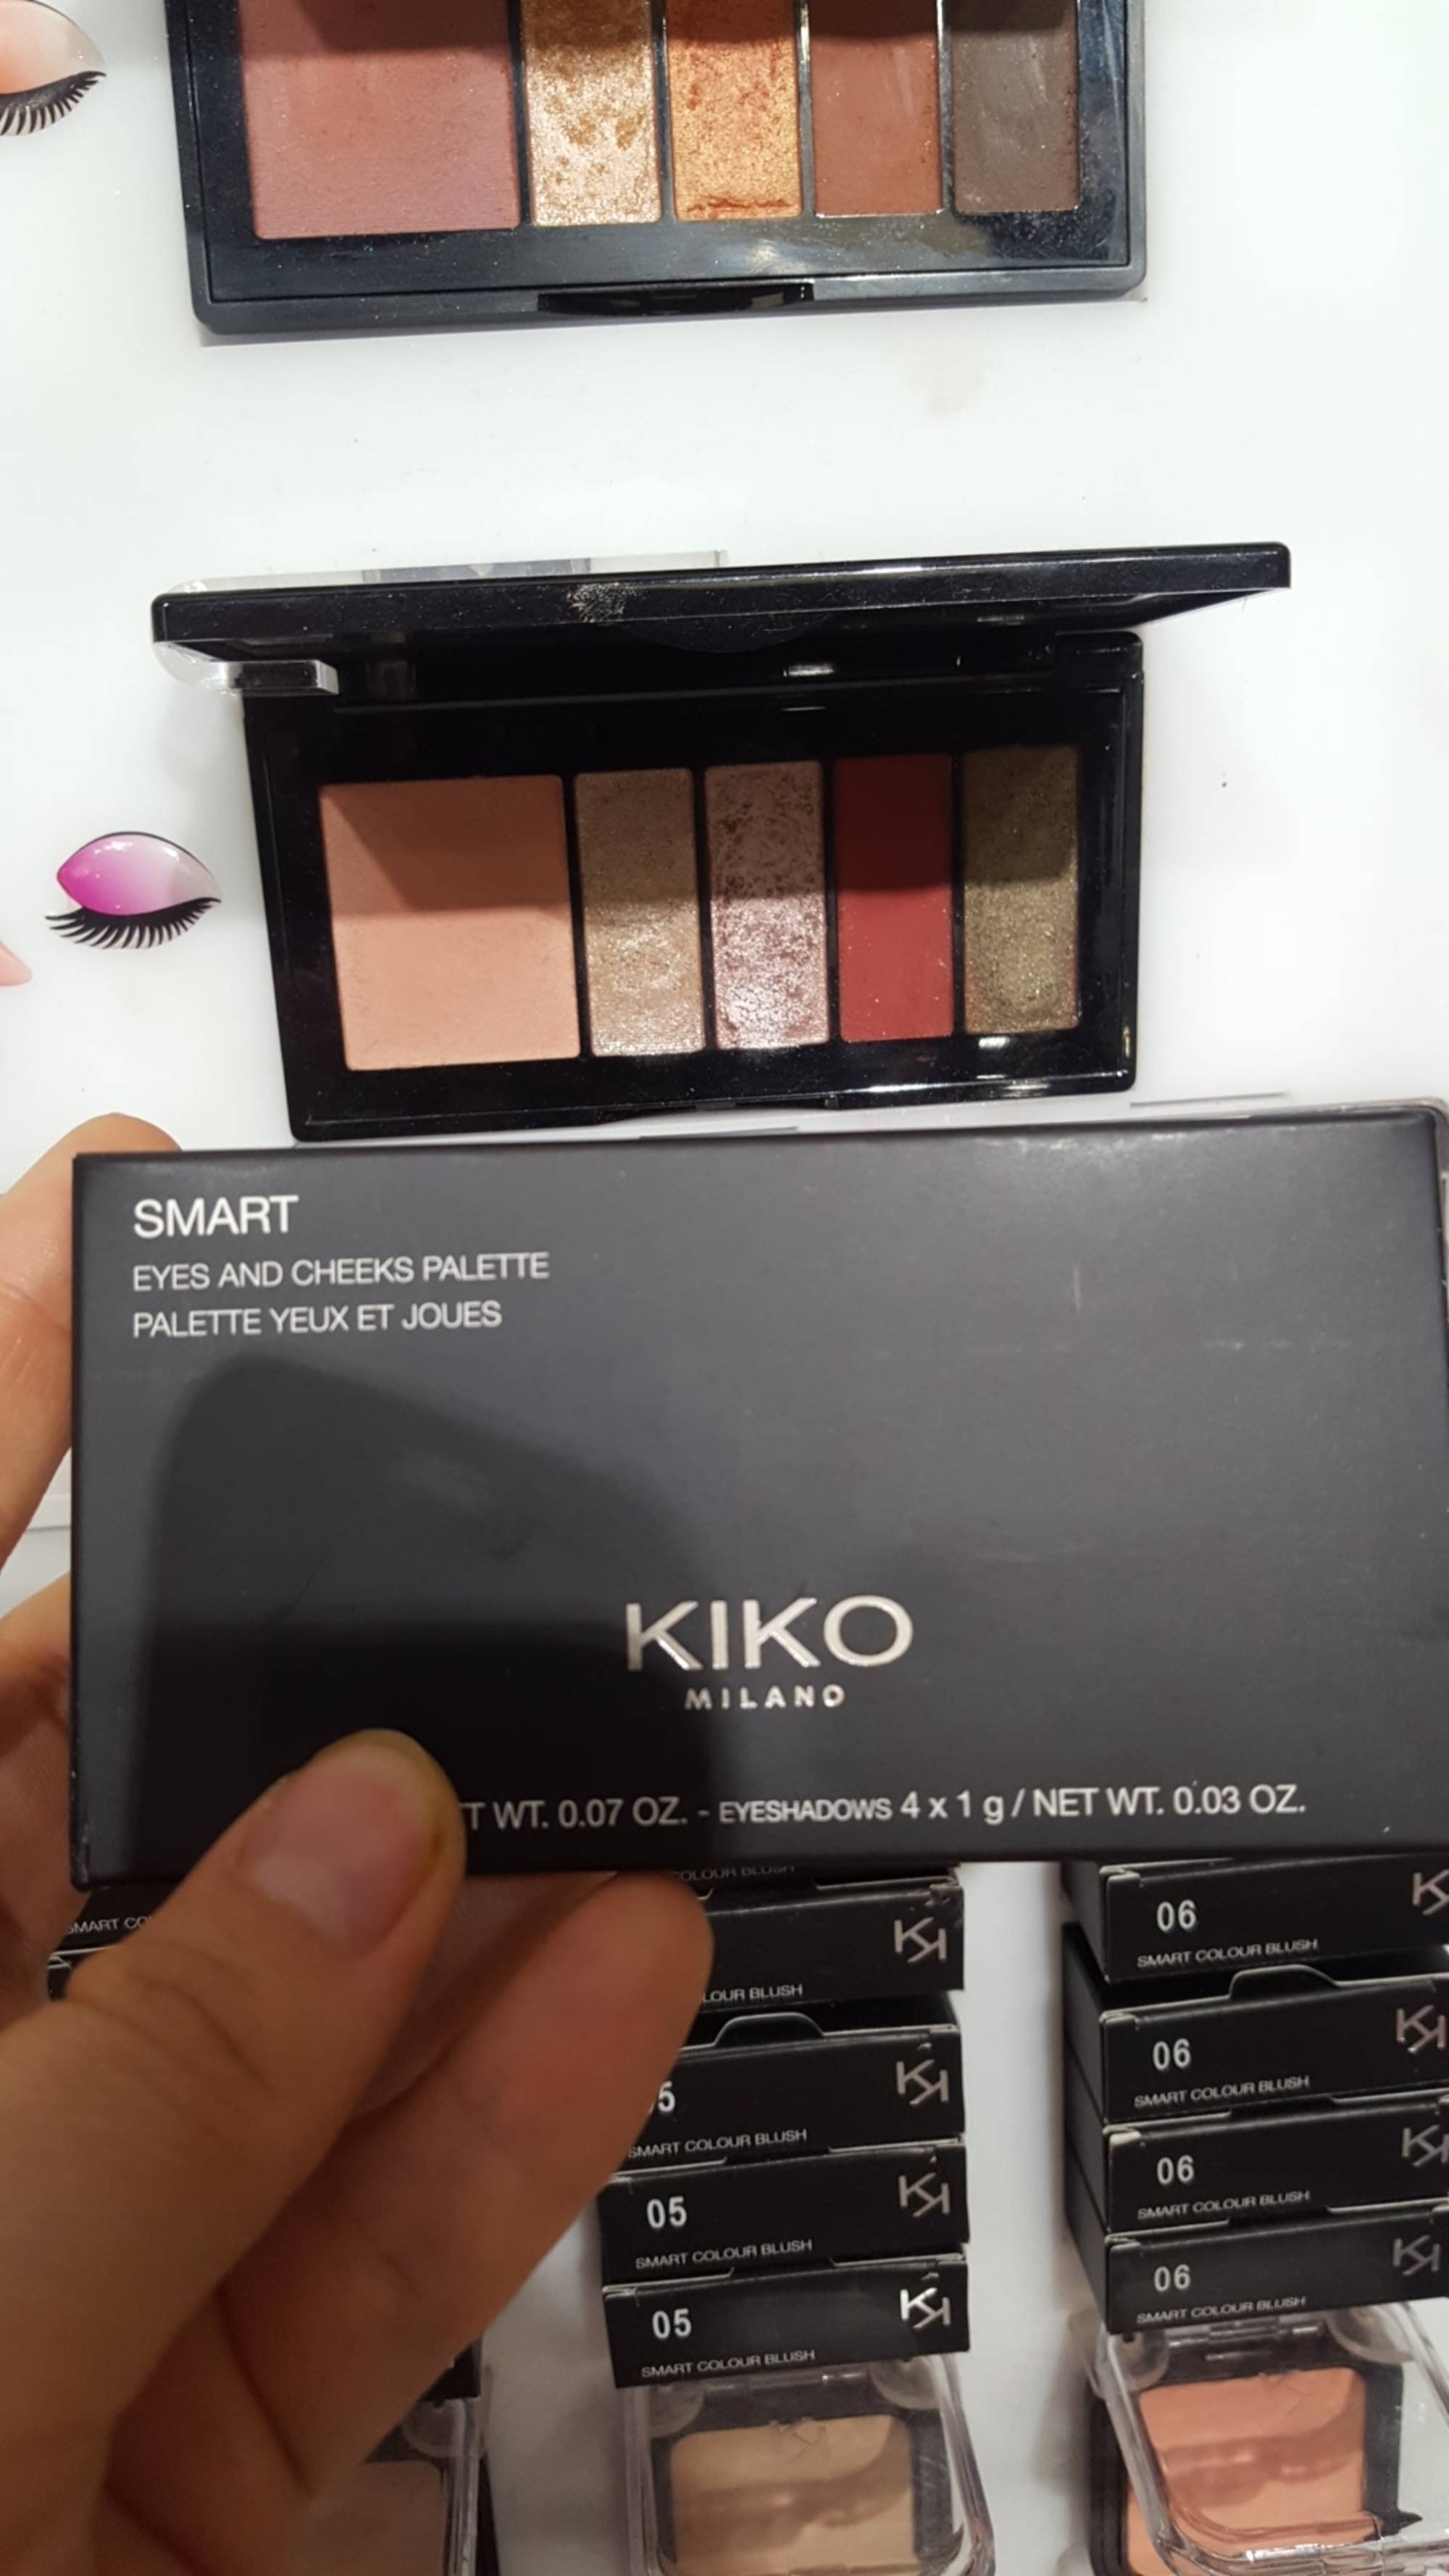 KIKO - Smart - Palette yeux et joues